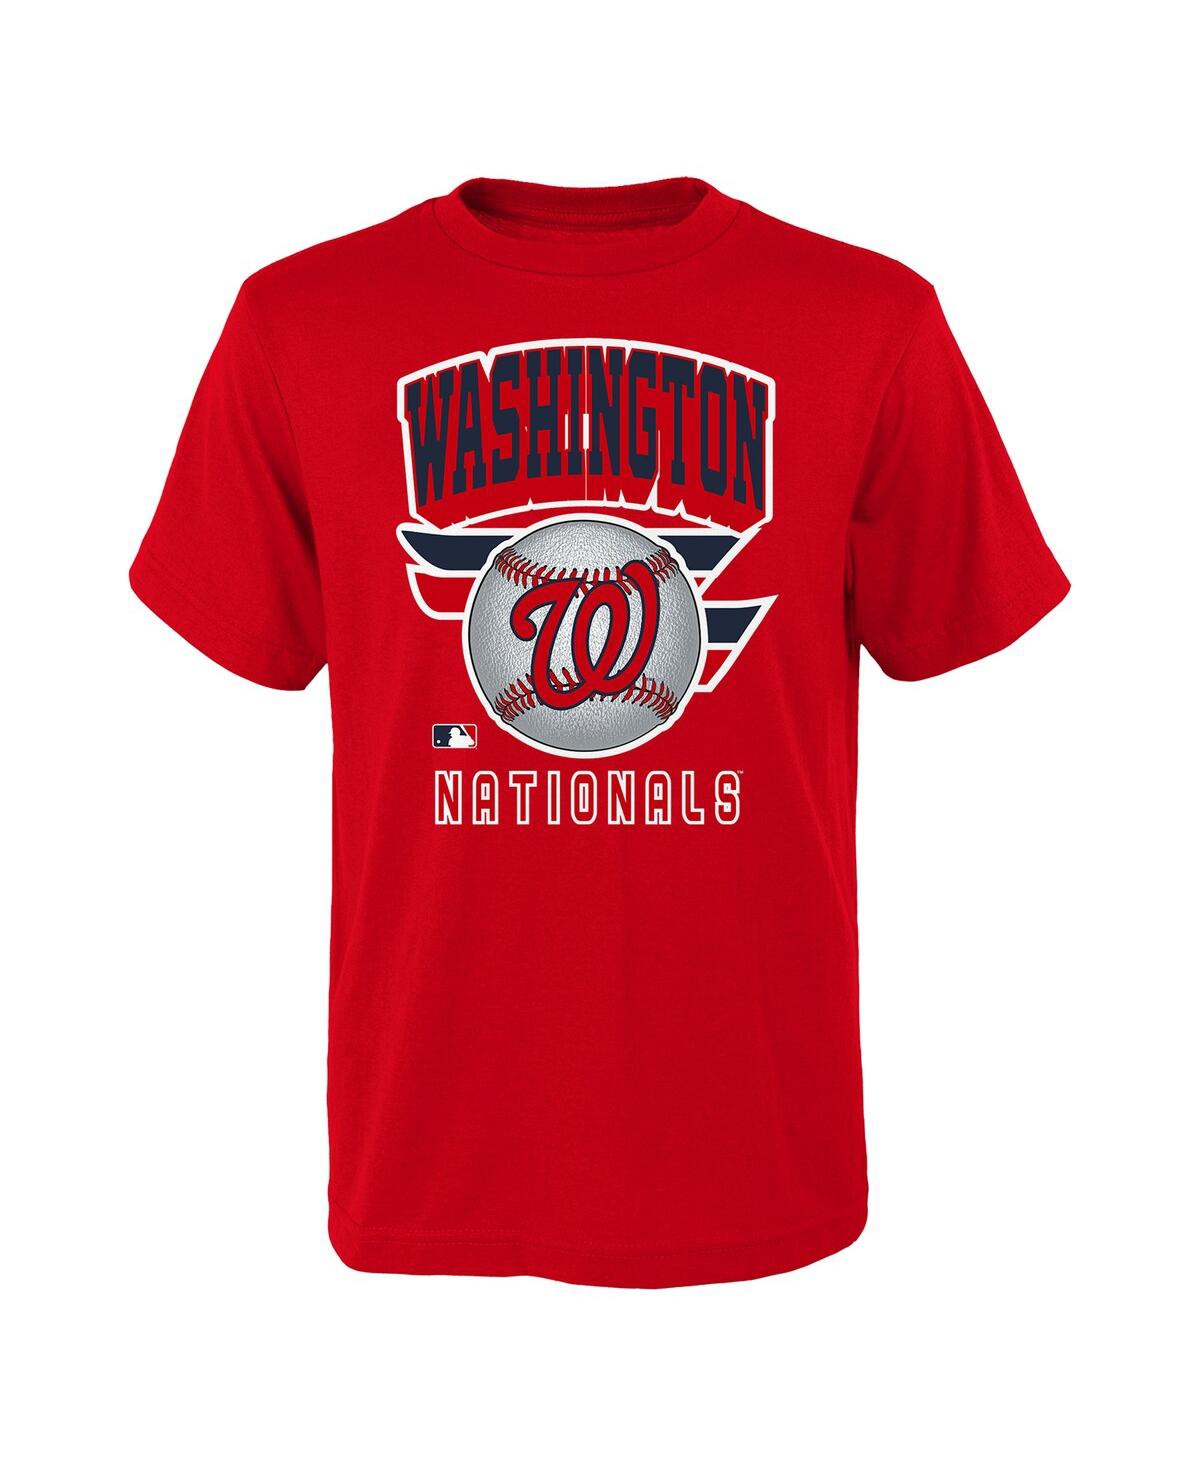 Outerstuff Kids' Big Boys Red Washington Nationals Ninety Seven T-shirt